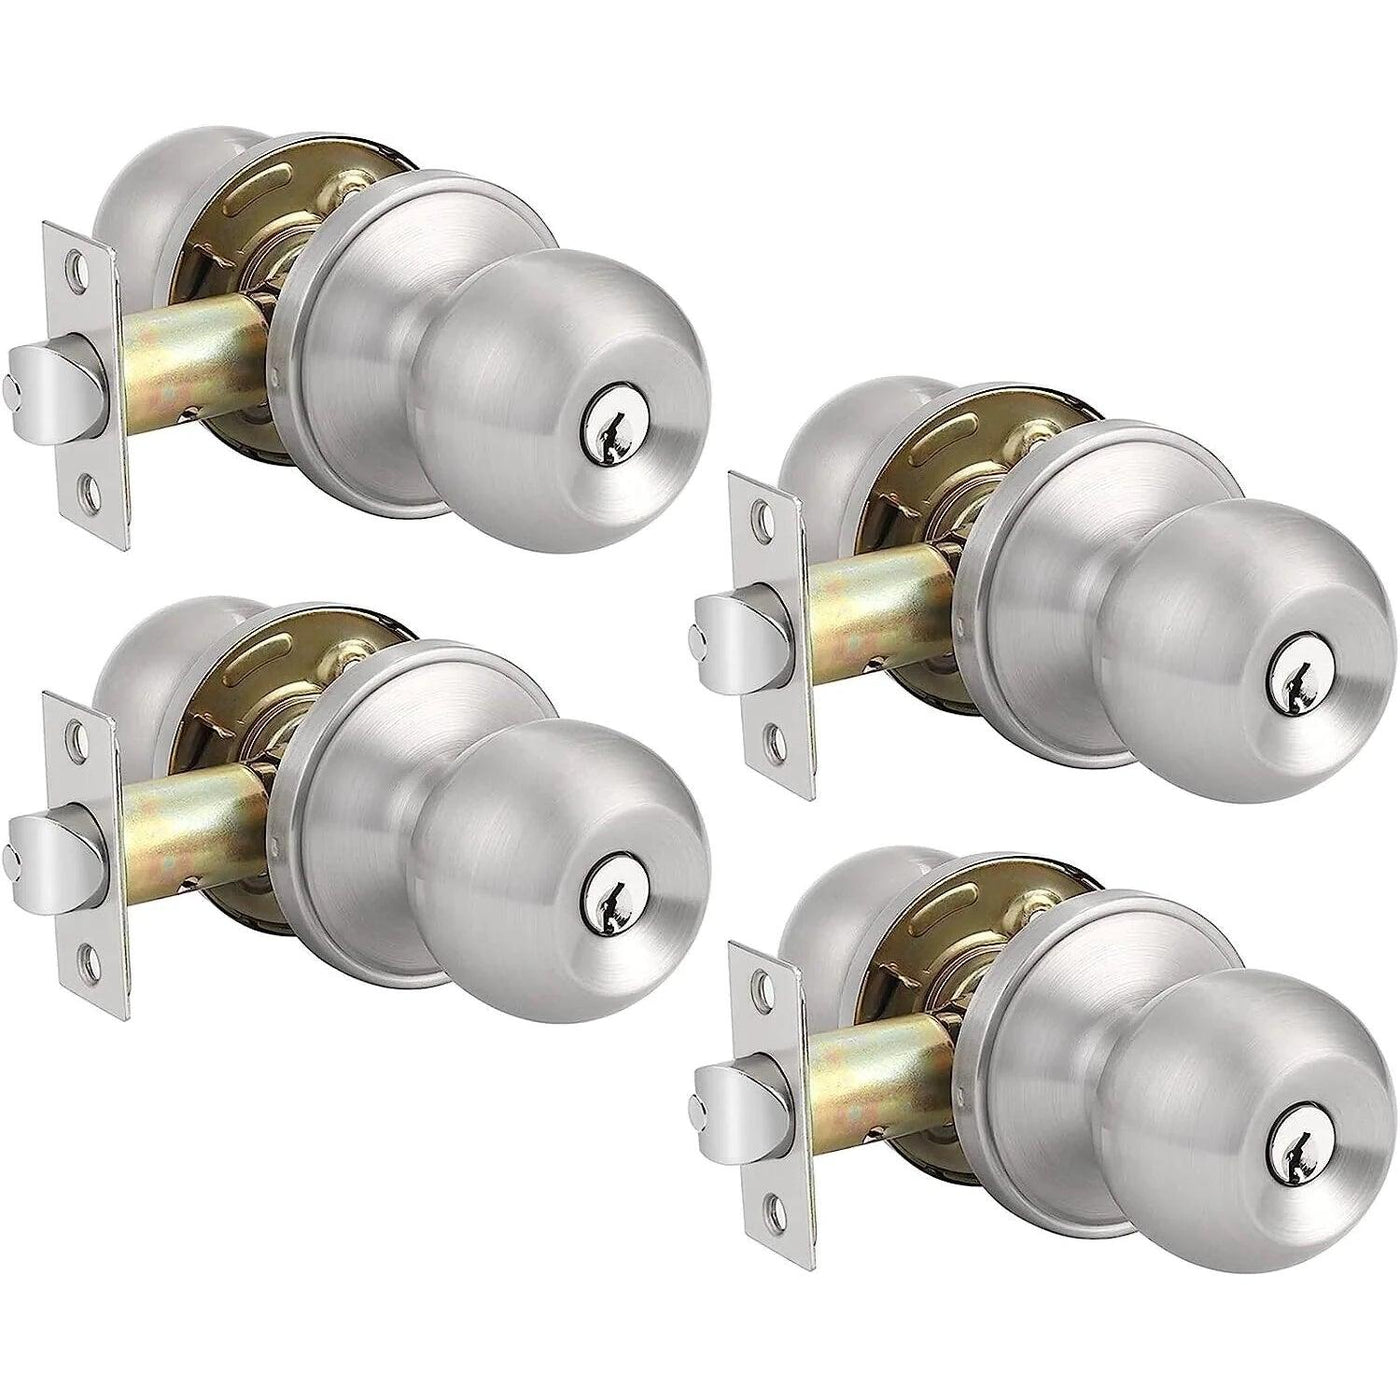 Probrico Door Knob with Keyn 4 Pack Stainless Steel Satin Nickel - Massive Discounts